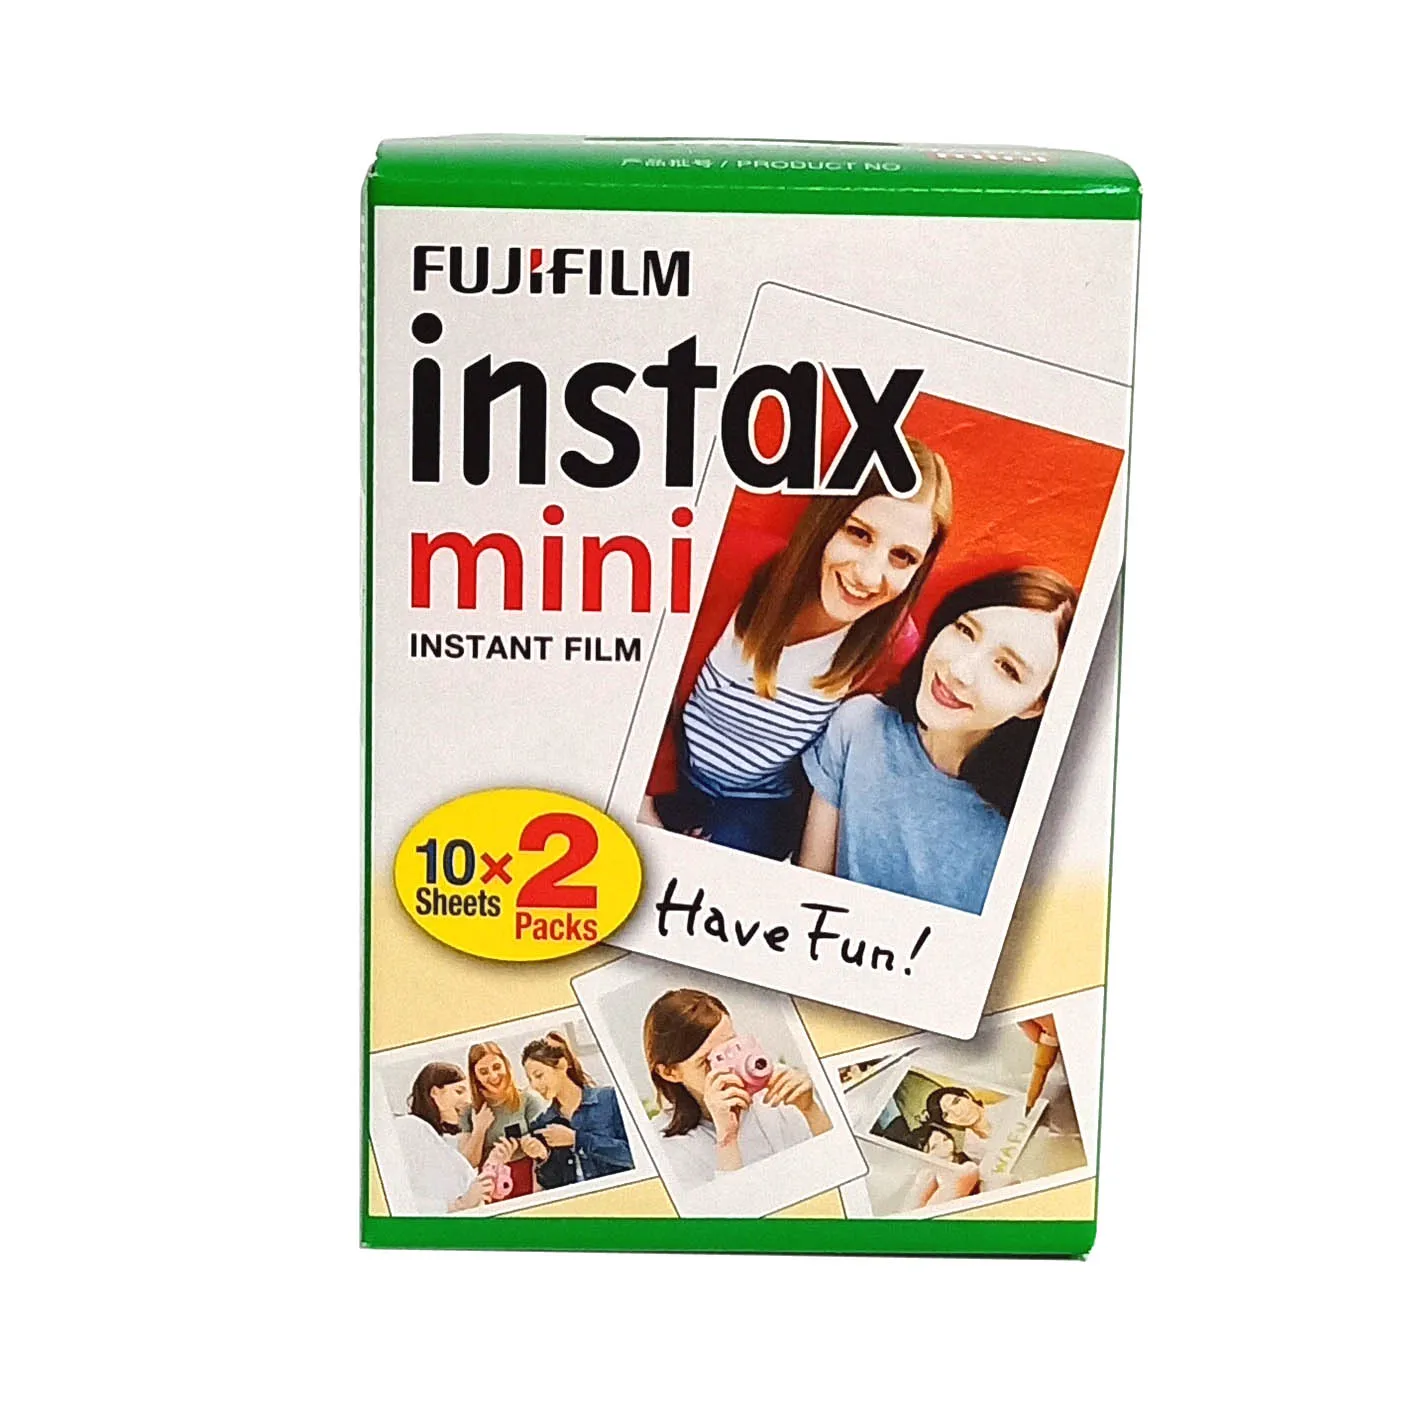 Fujifilm-papel fotográfico para cámara instantánea Fuji Instax Mini 11, 8, 9,  90, Link, Liplay, EVO, 10-100 hojas - AliExpress